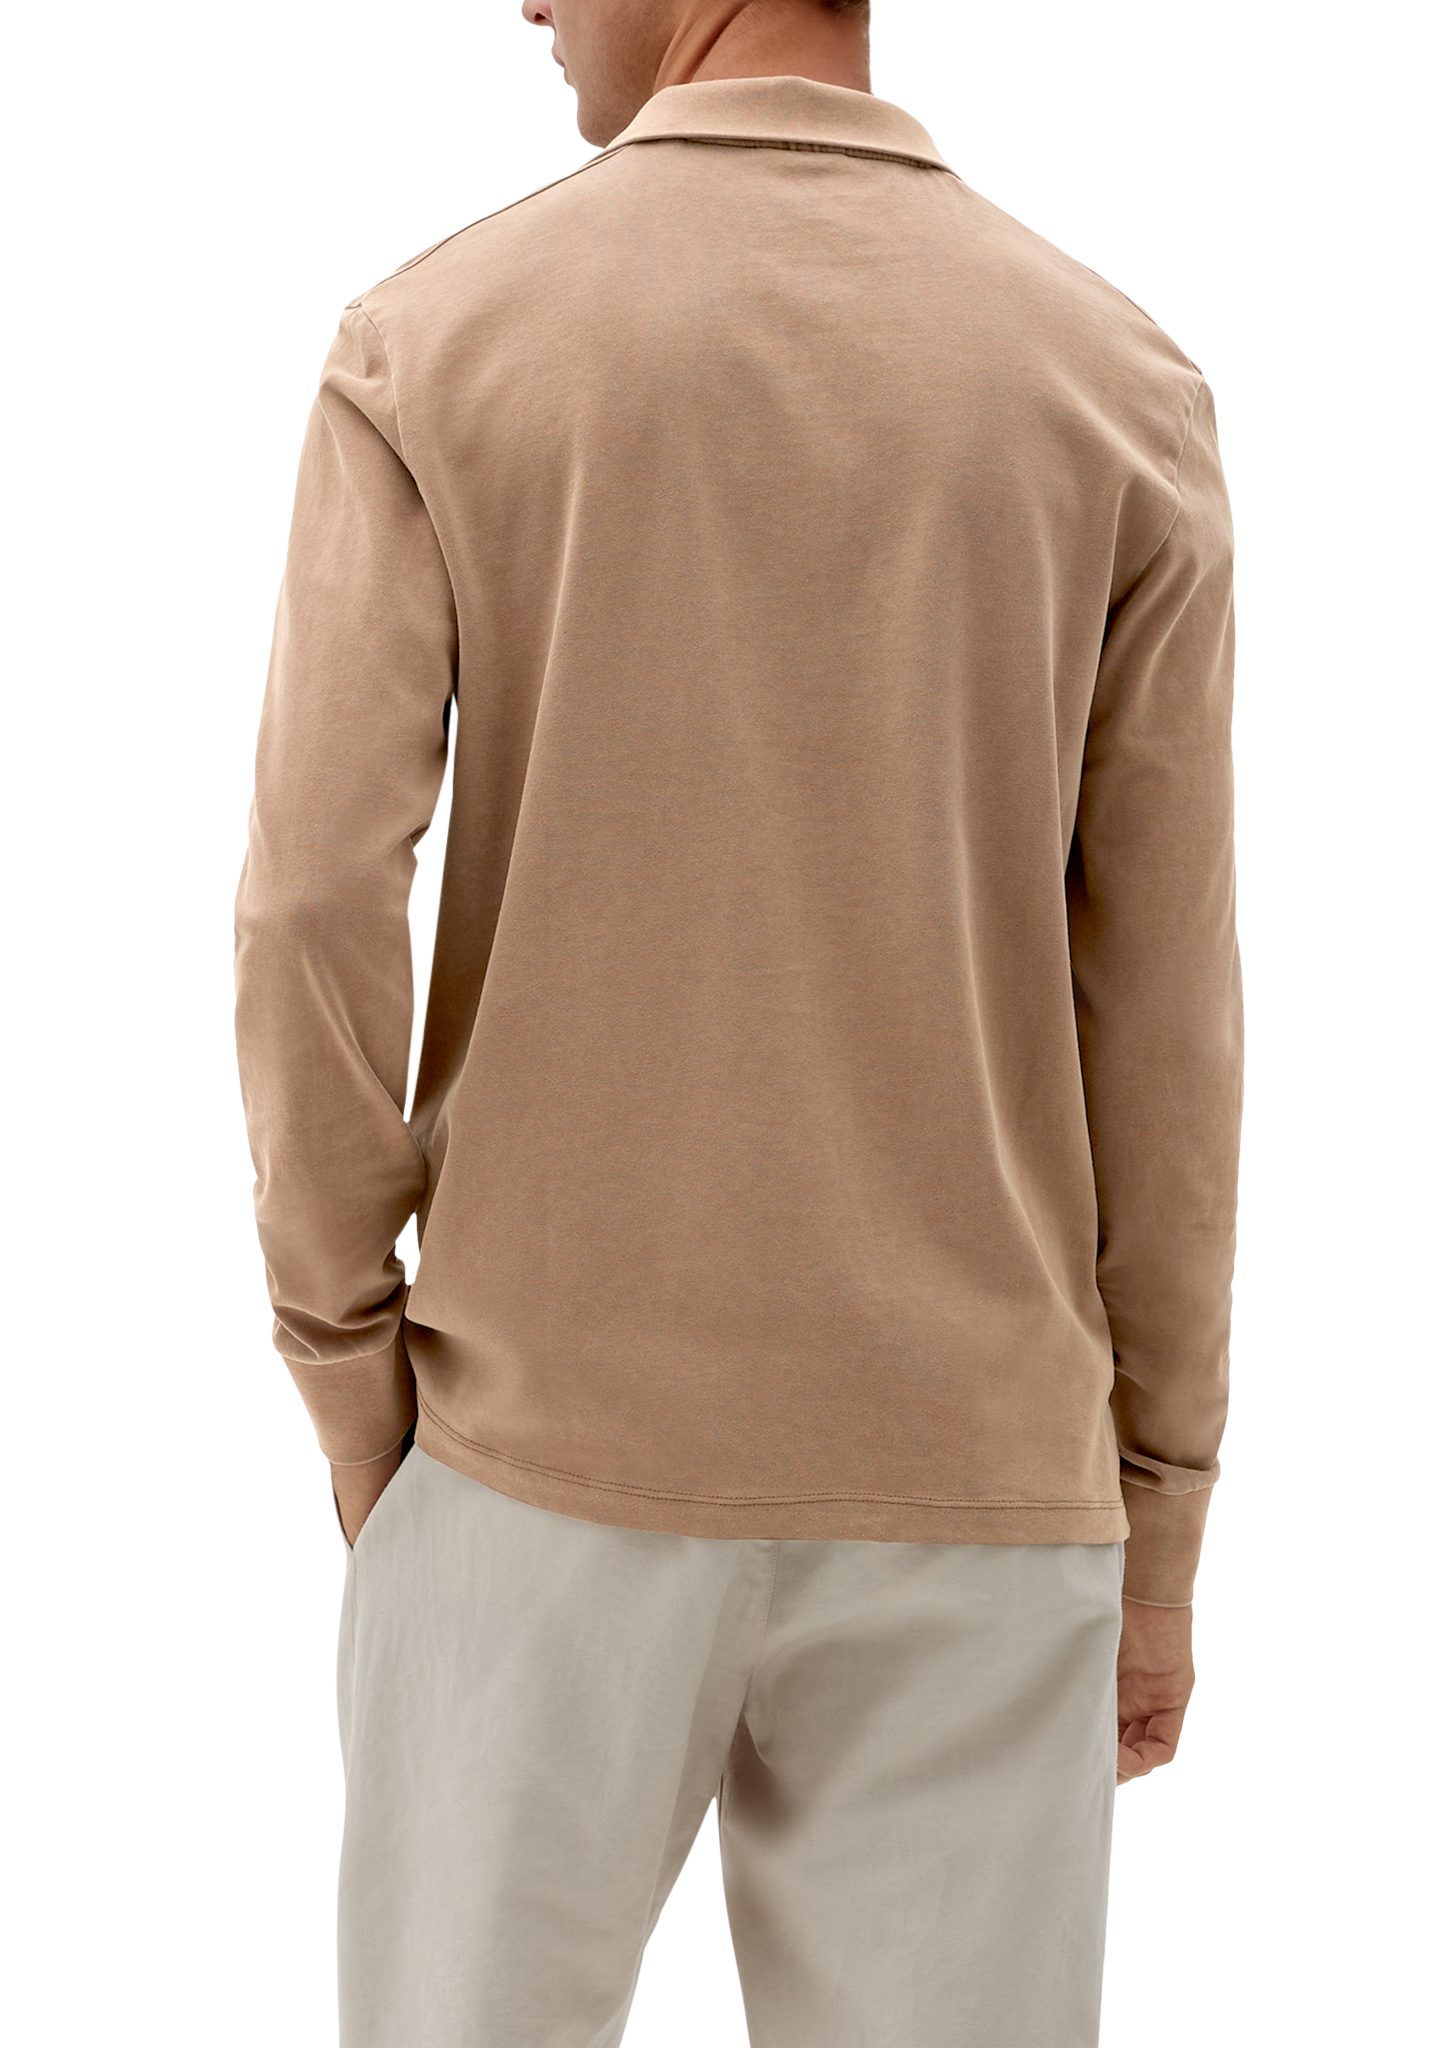 Waschung s.Oliver mit Logo, Shirt Langarmshirt karamell Troyer-Kragen